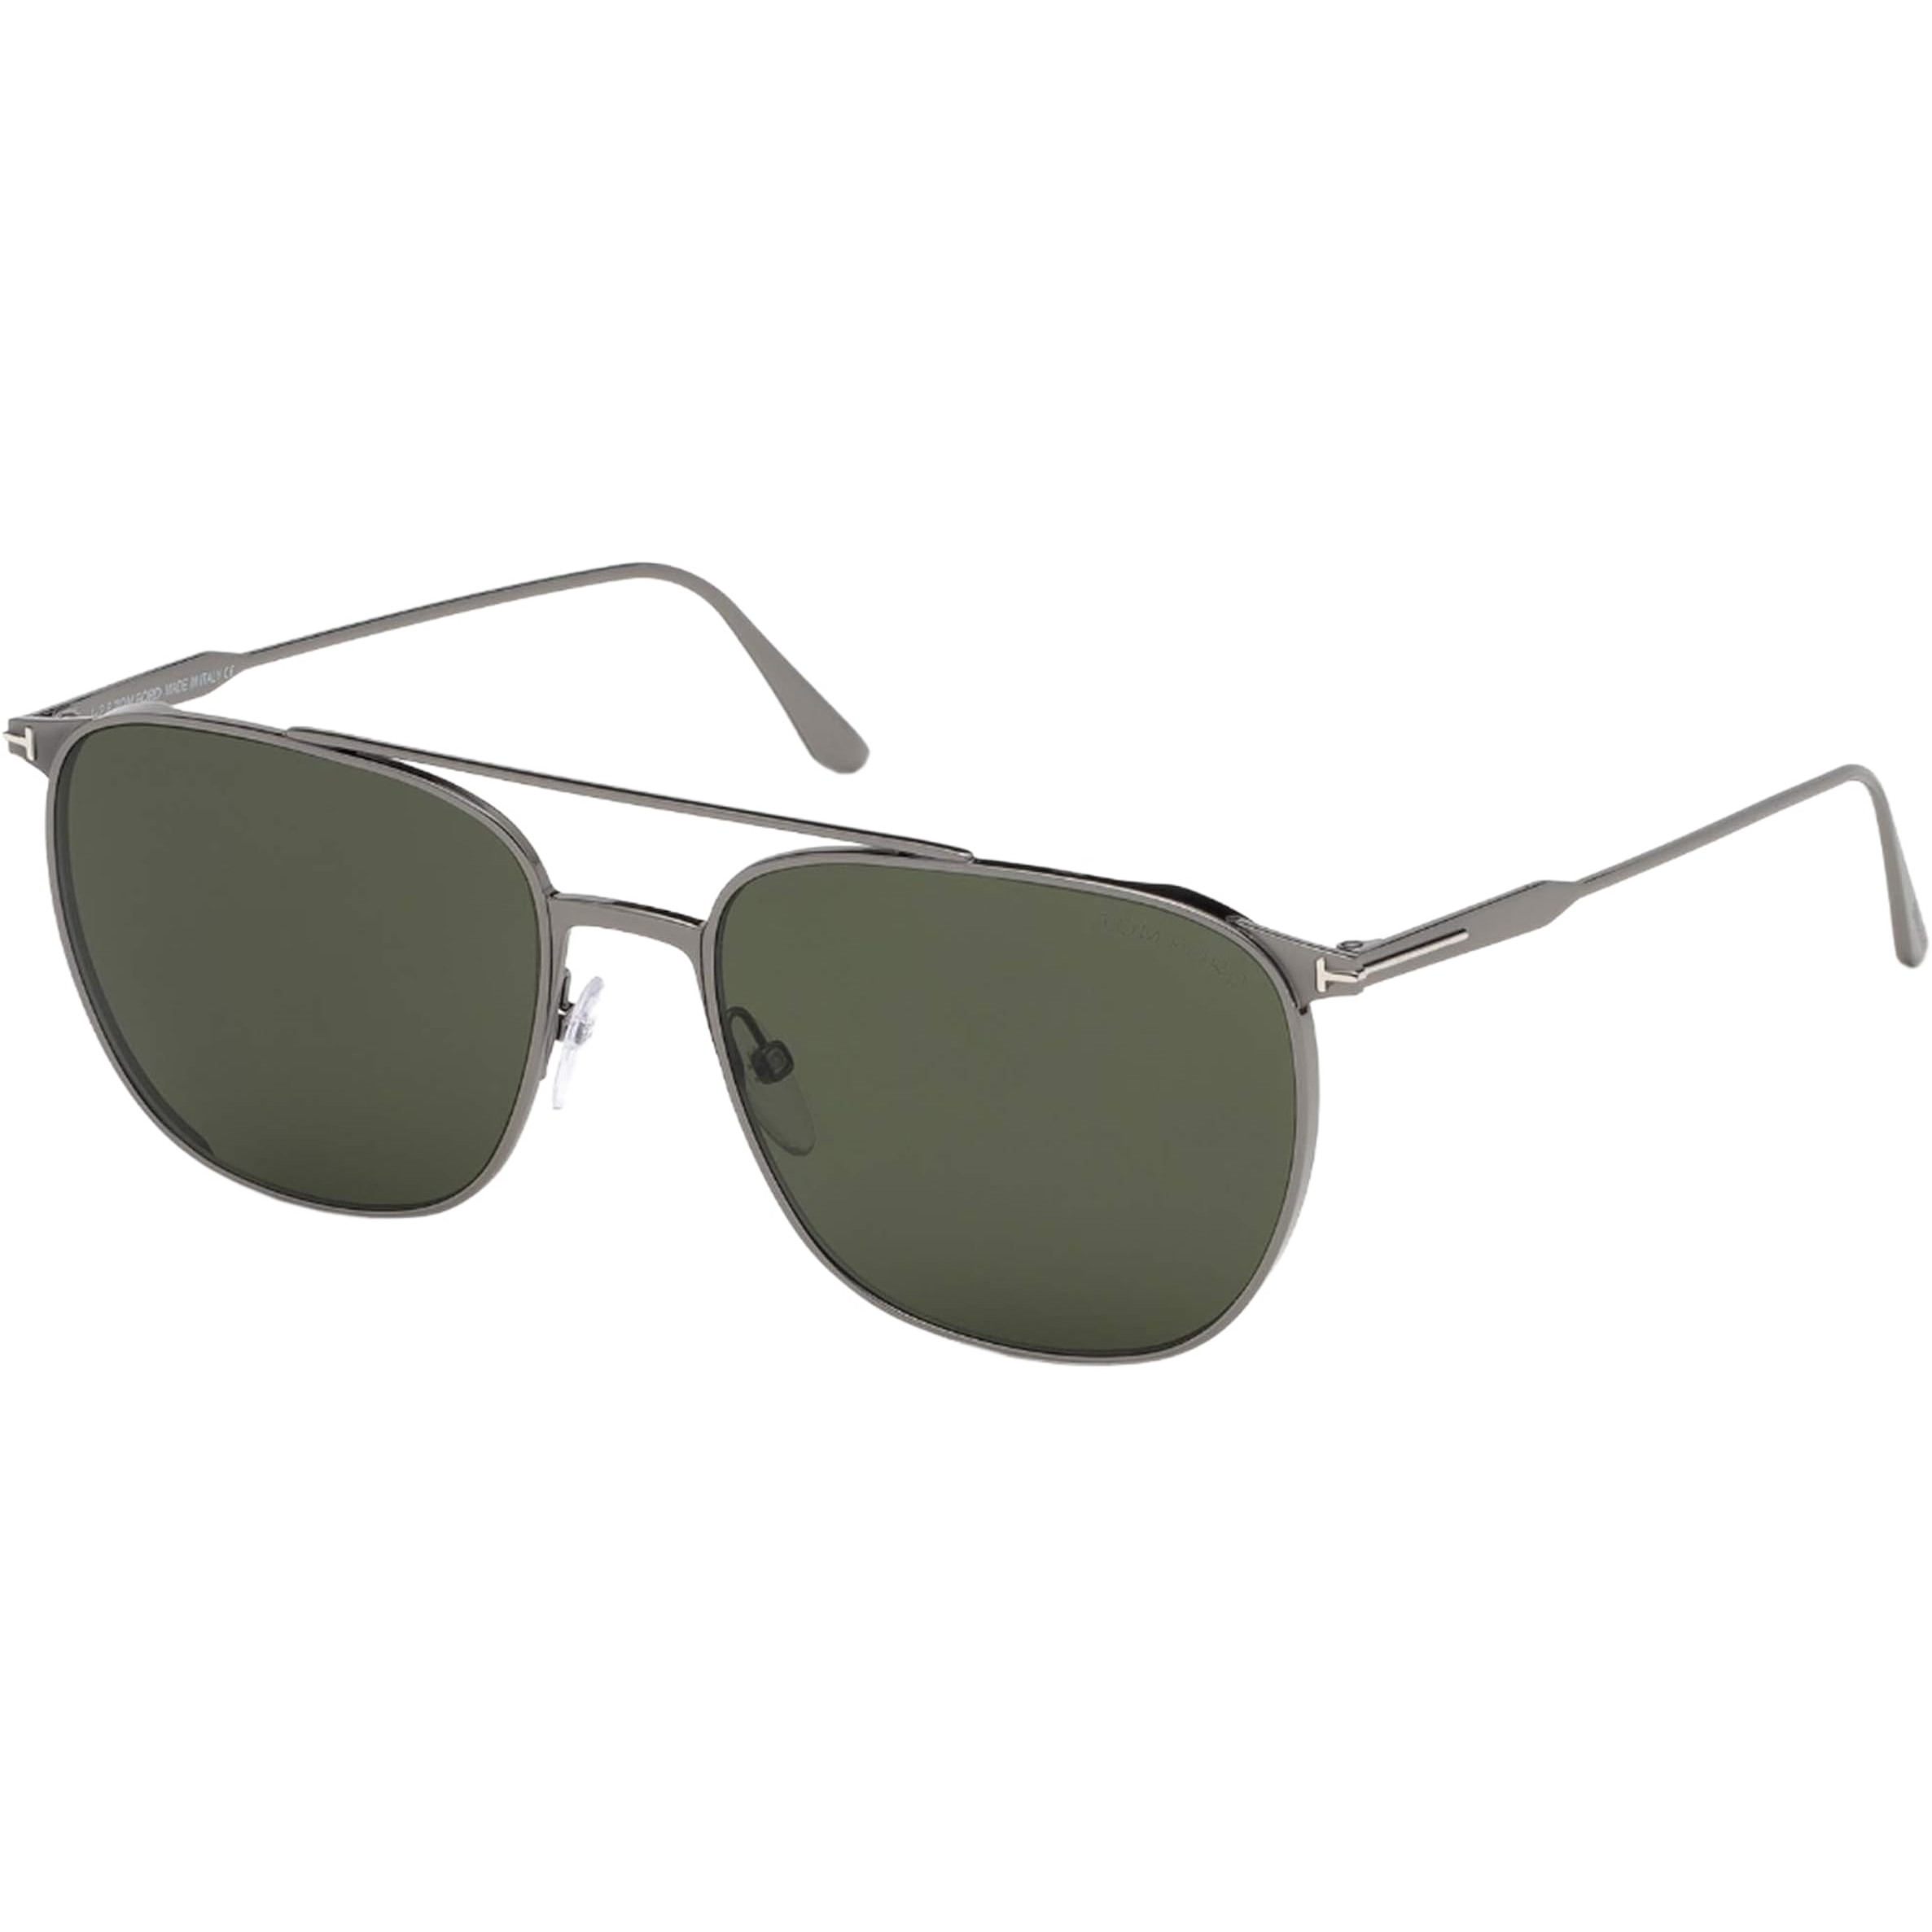 Tom Ford Sunglasses Tom Ford Sunglasses FT0692 12N 58mm Kip Eyeglasses Eyewear UK USA Australia 